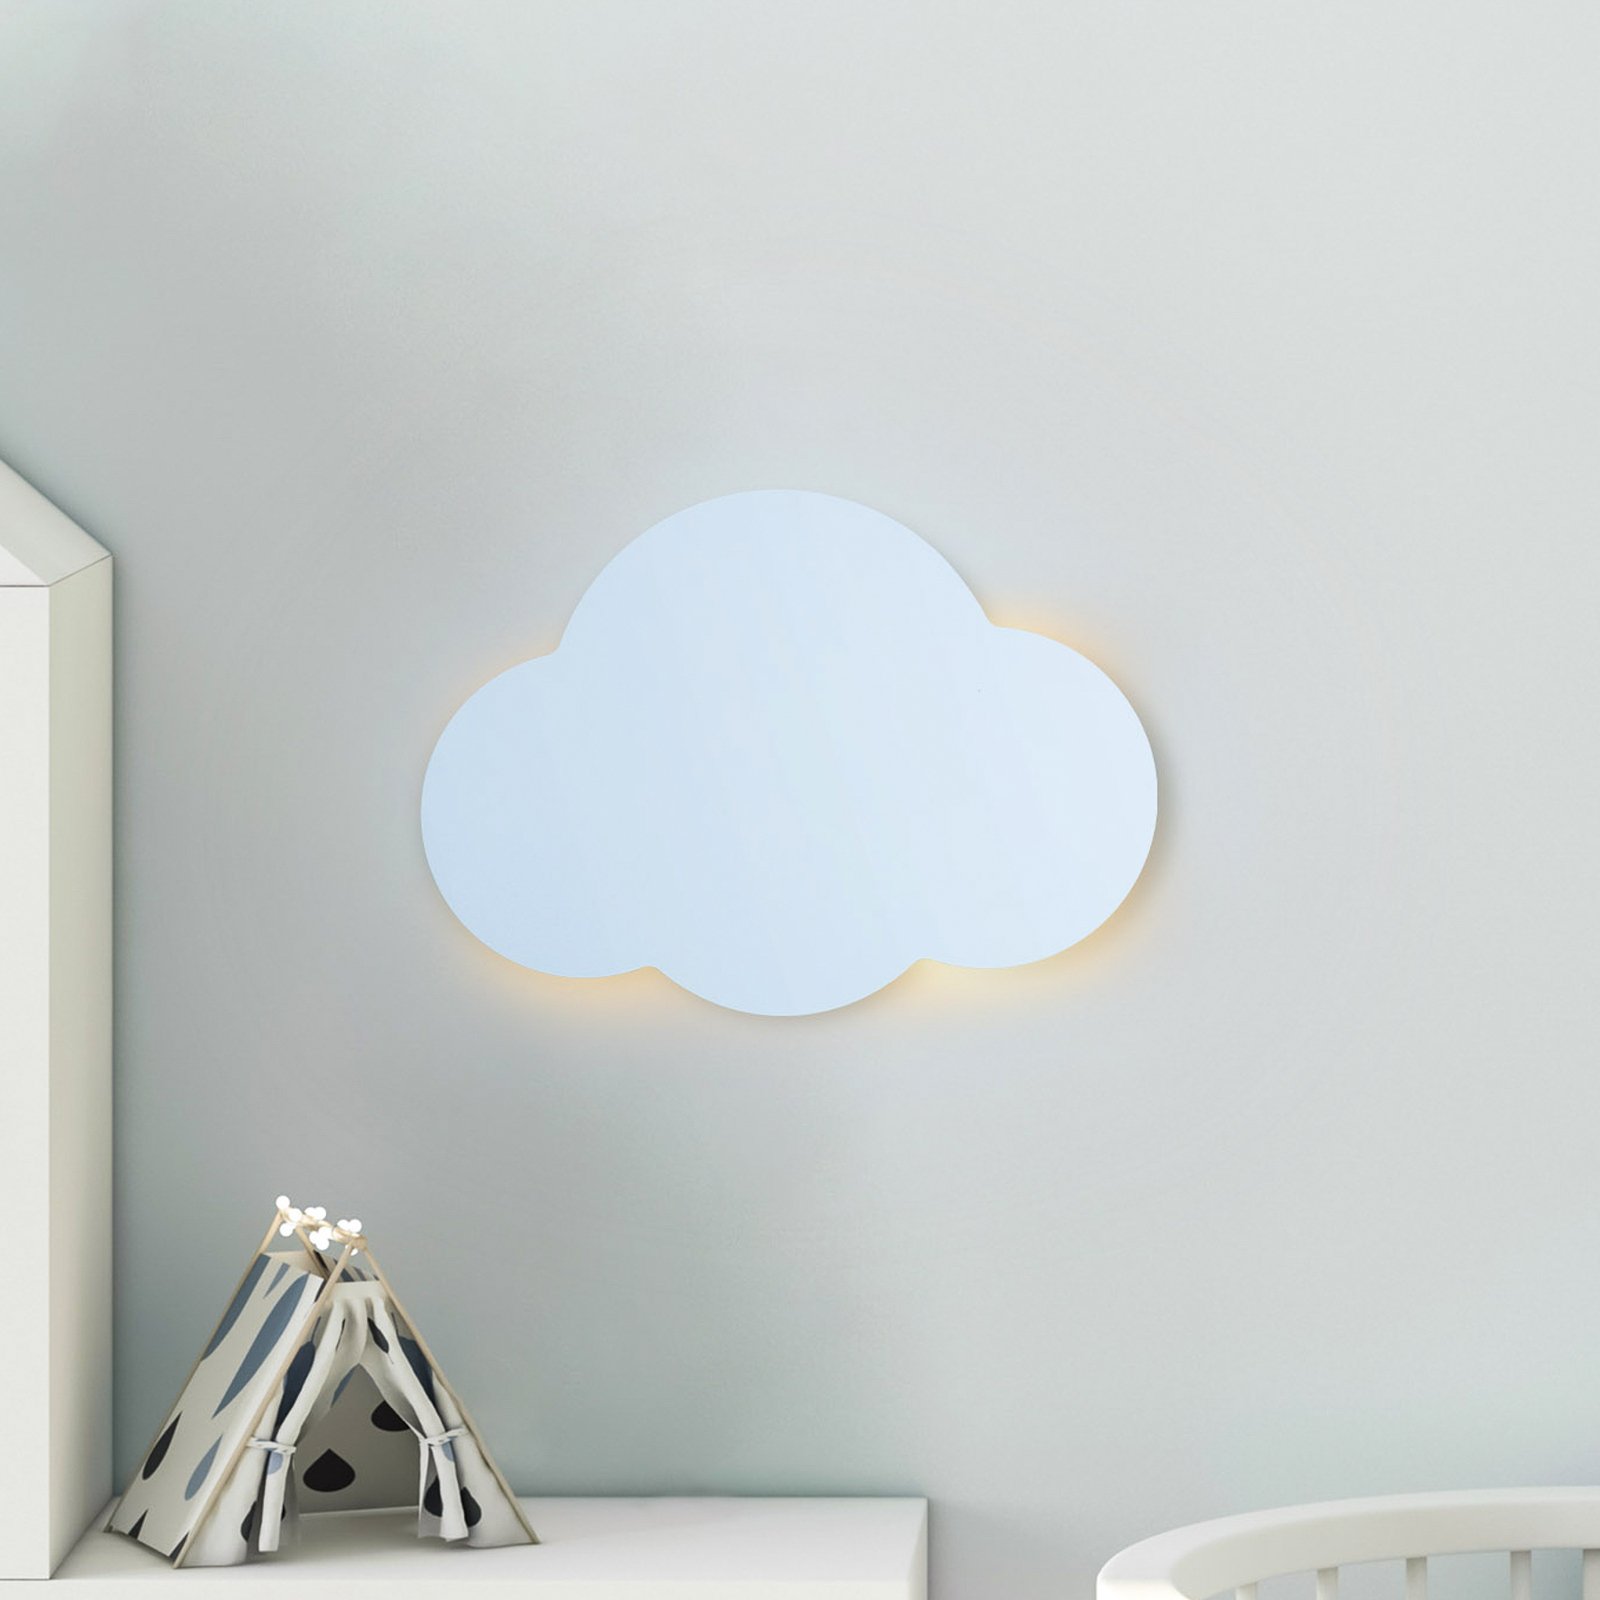 Wandlamp Cloud, blauw, staal, indirect licht, 38 x 27 cm